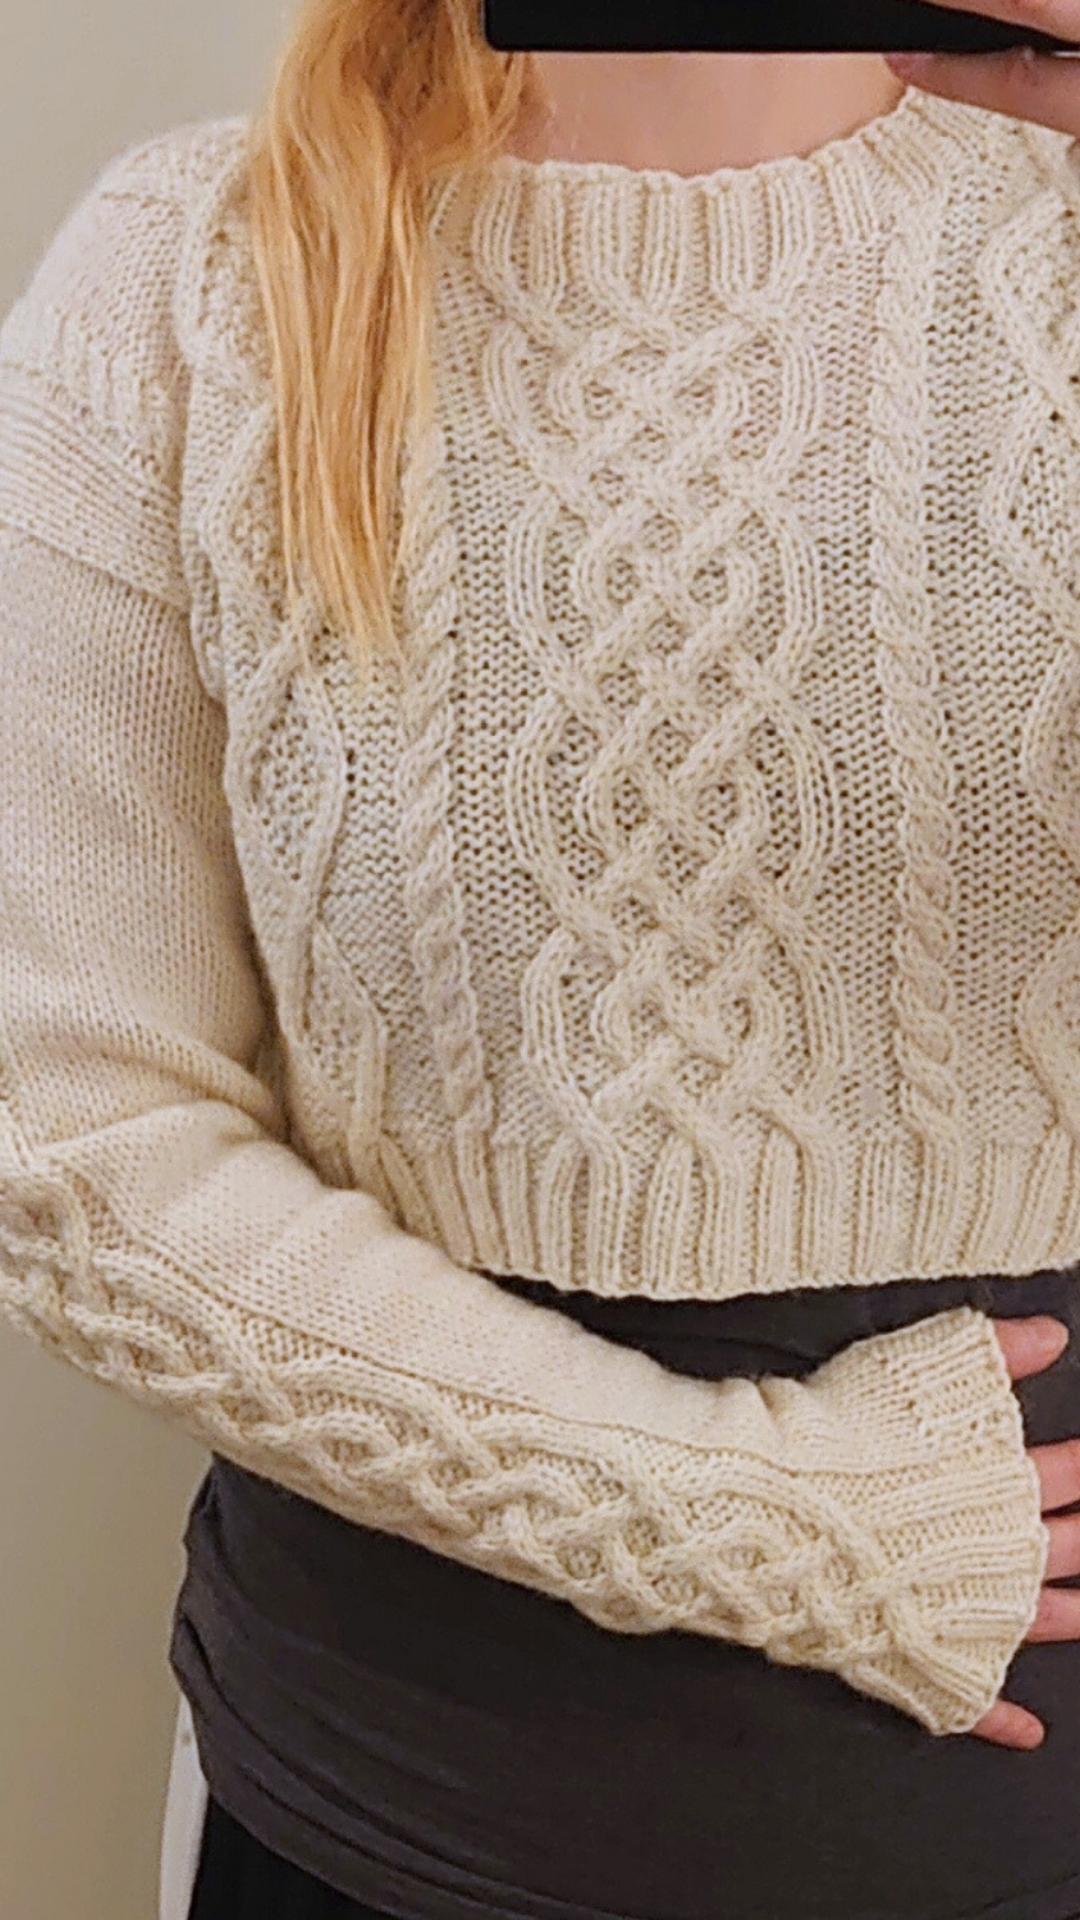 Iiris' Sweater - Cropped Aran Cable Sweater Knitting Pattern